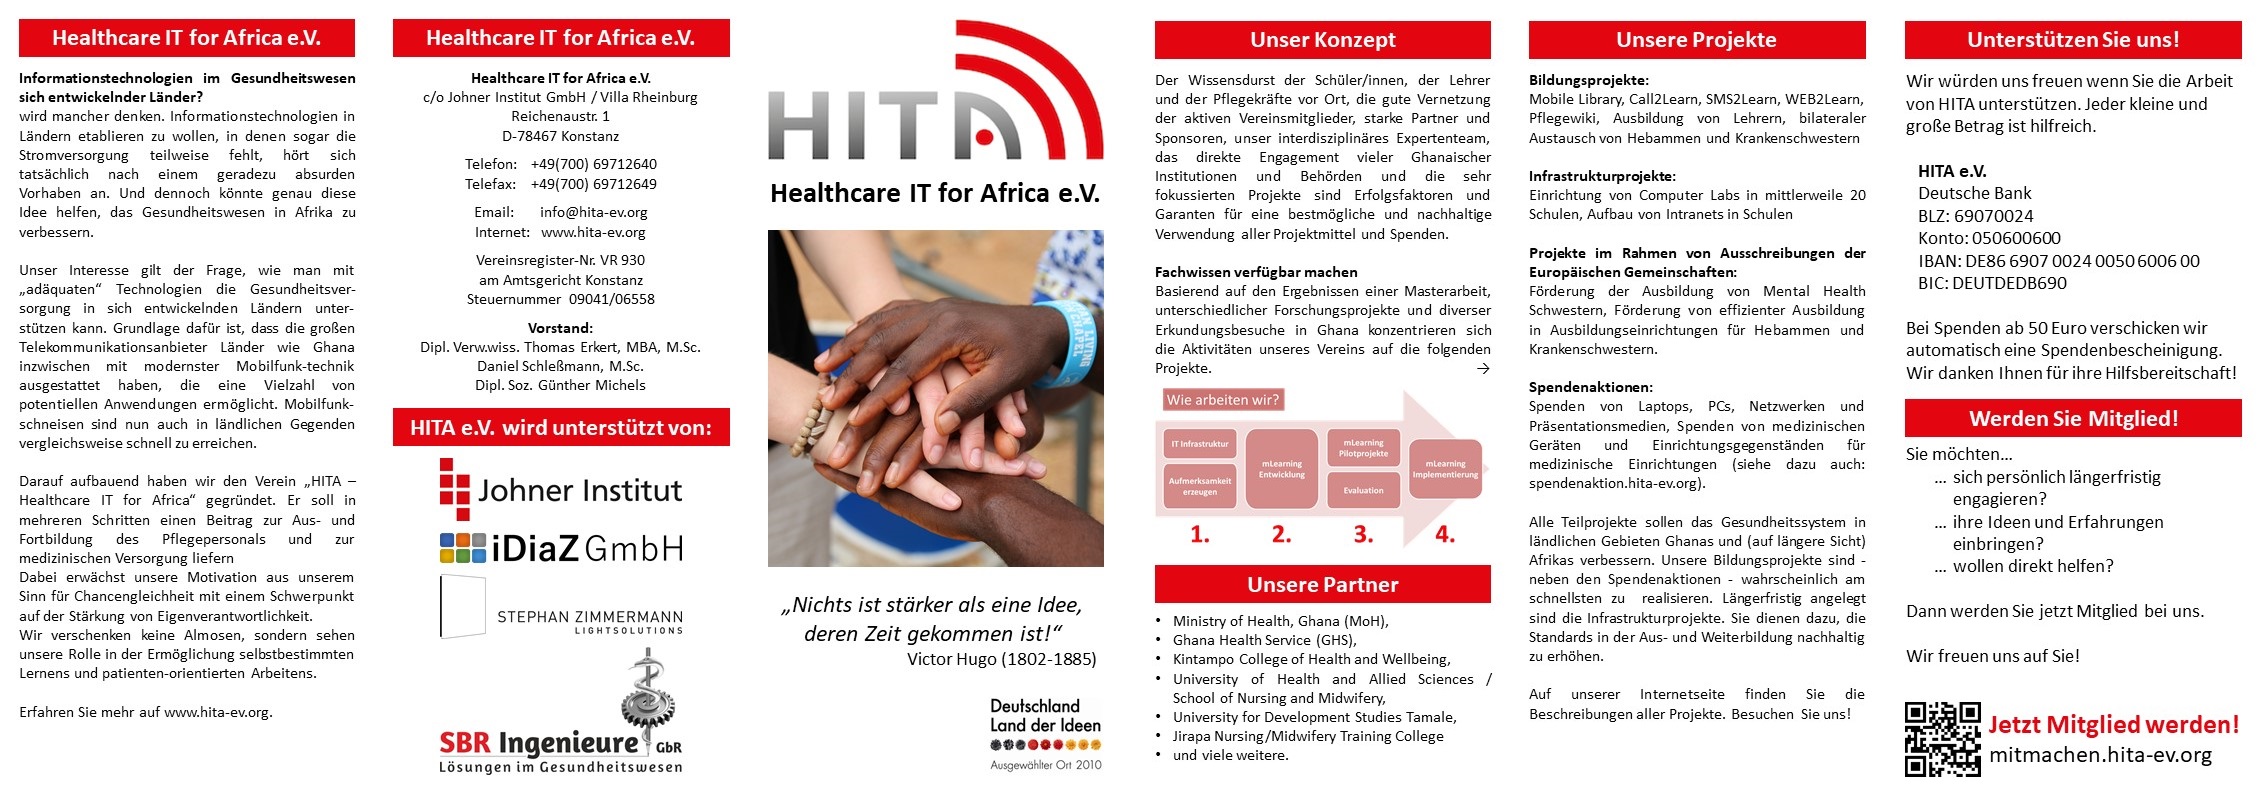 Imageflyer: New HITA info brochure